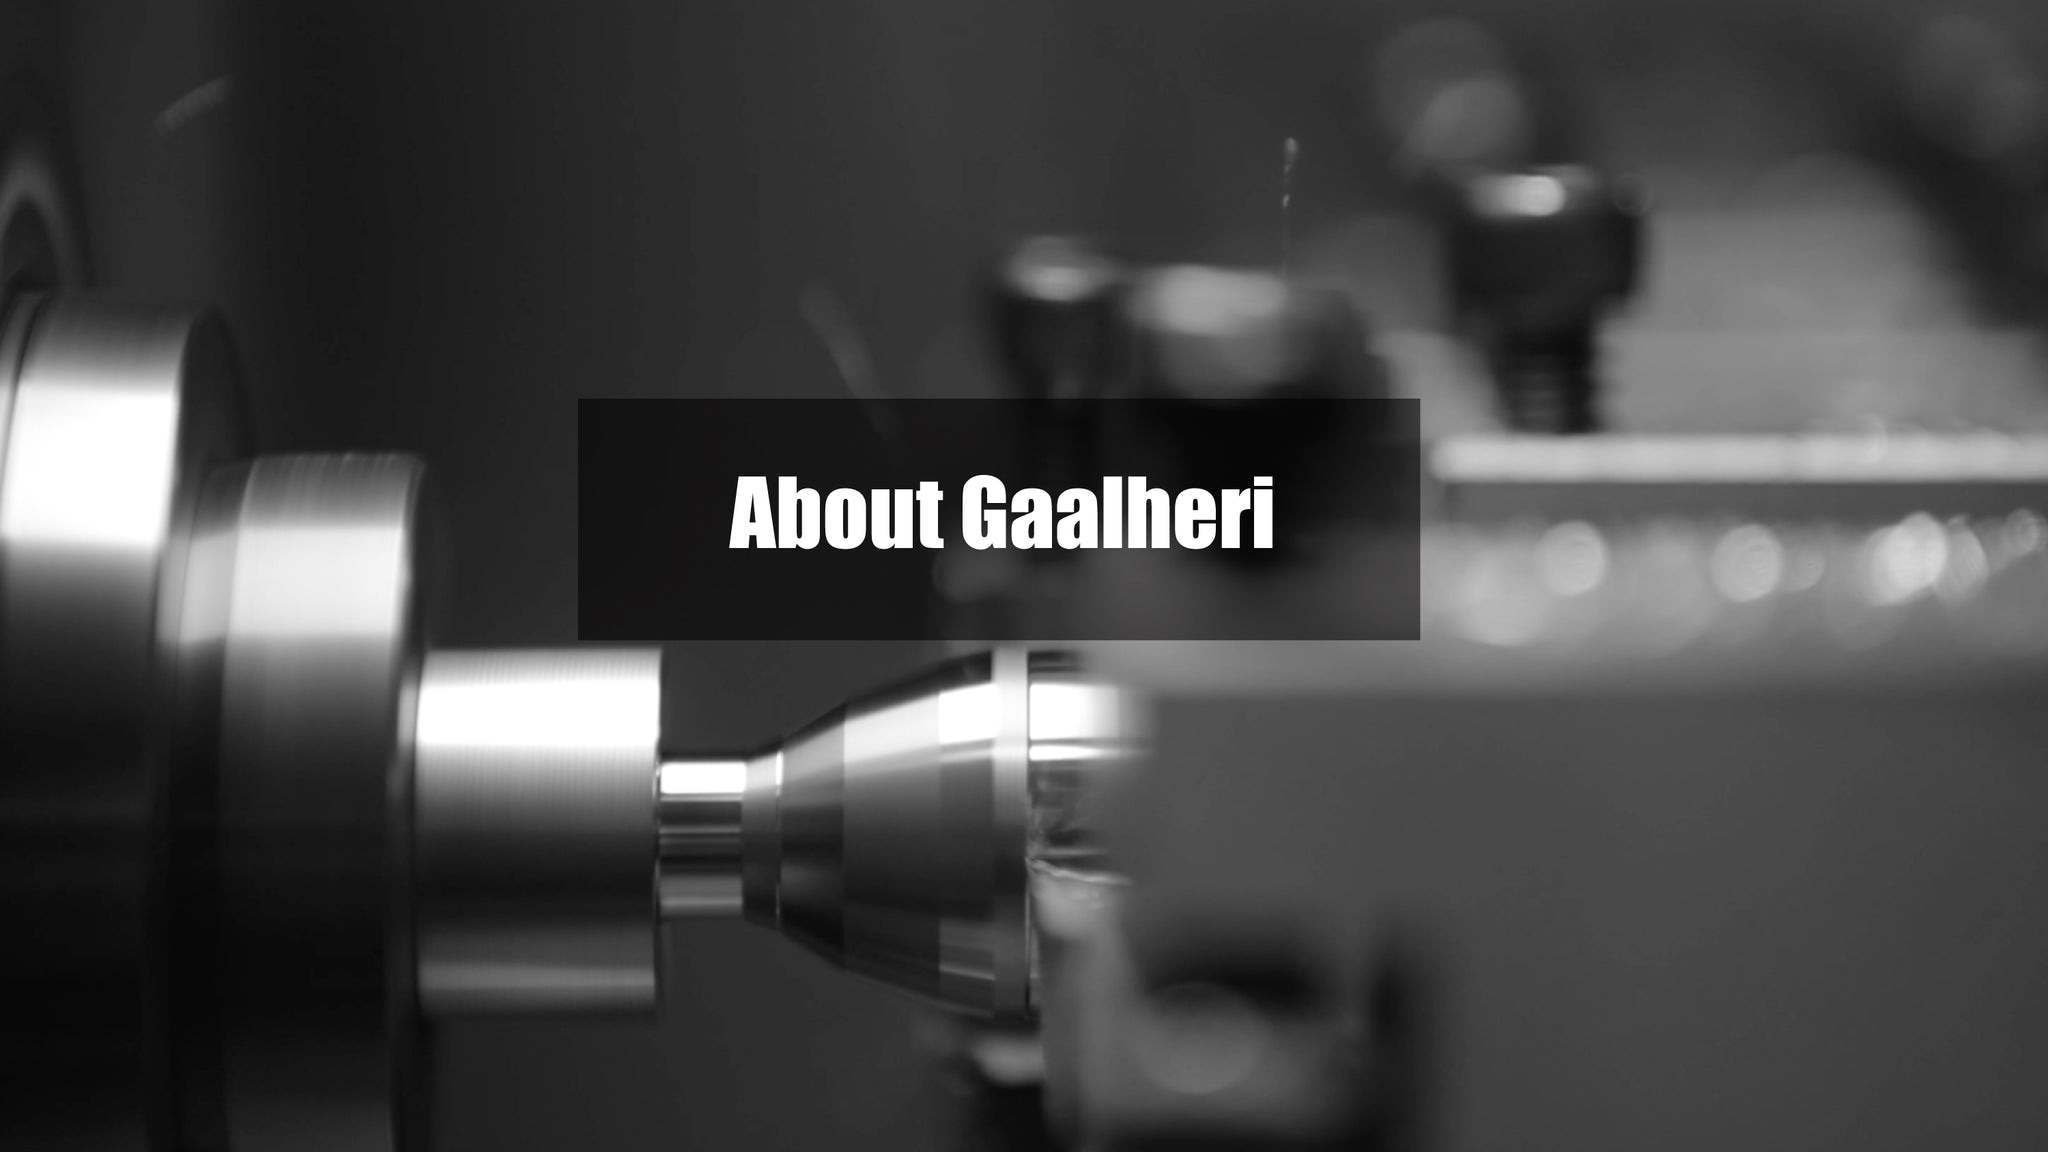 About Gaahleri